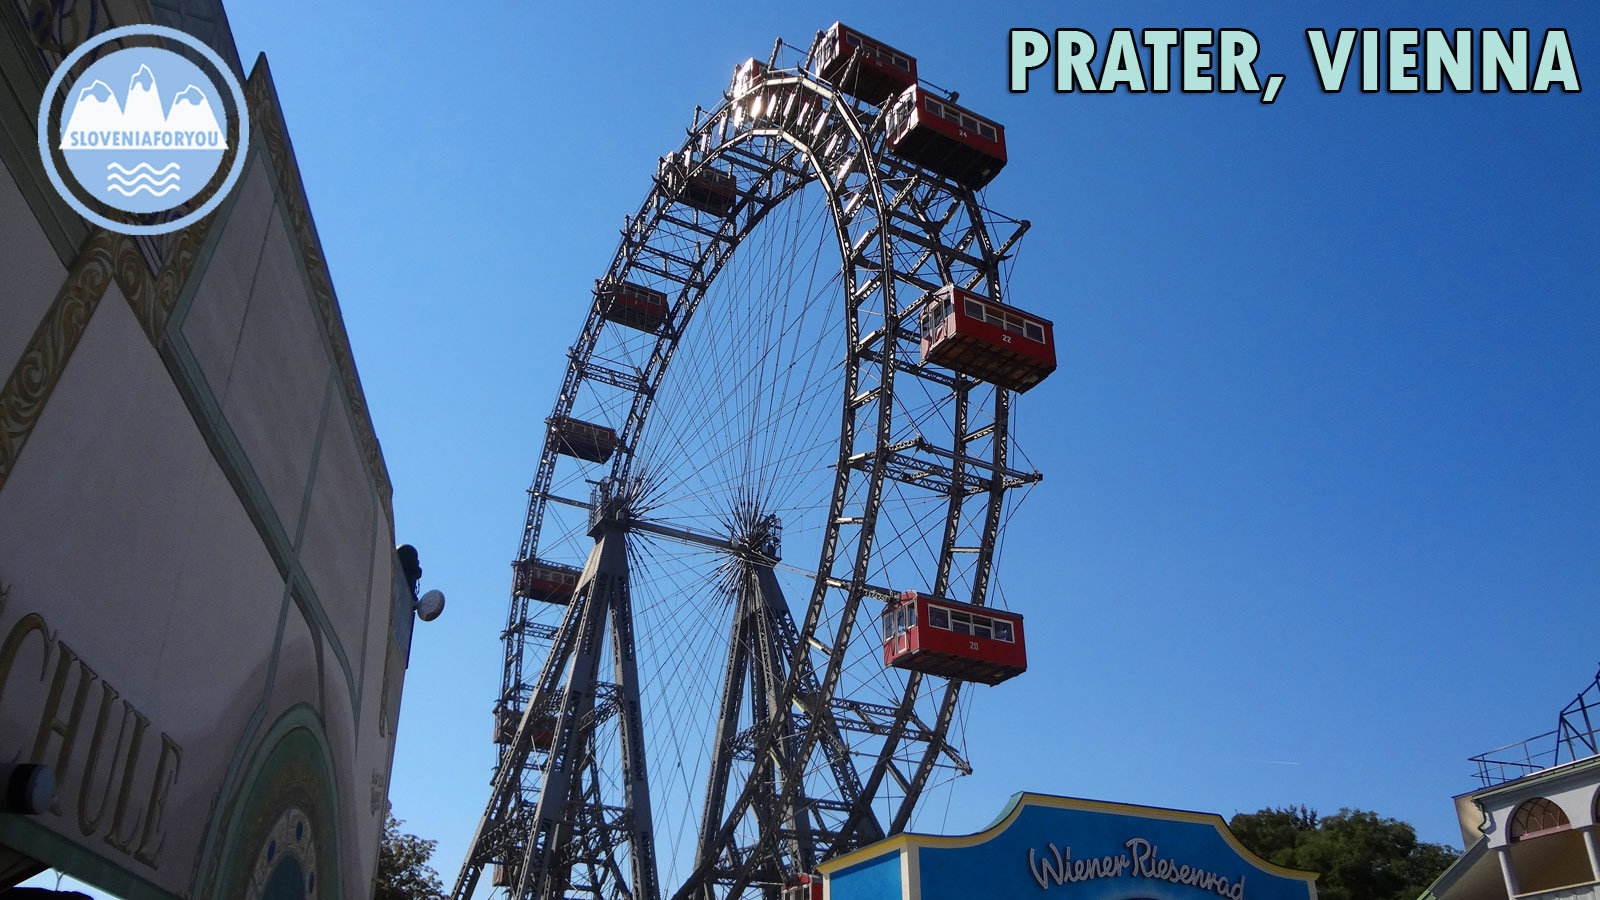 The big wheel at Prater, Vienna, Sloveniaforyou